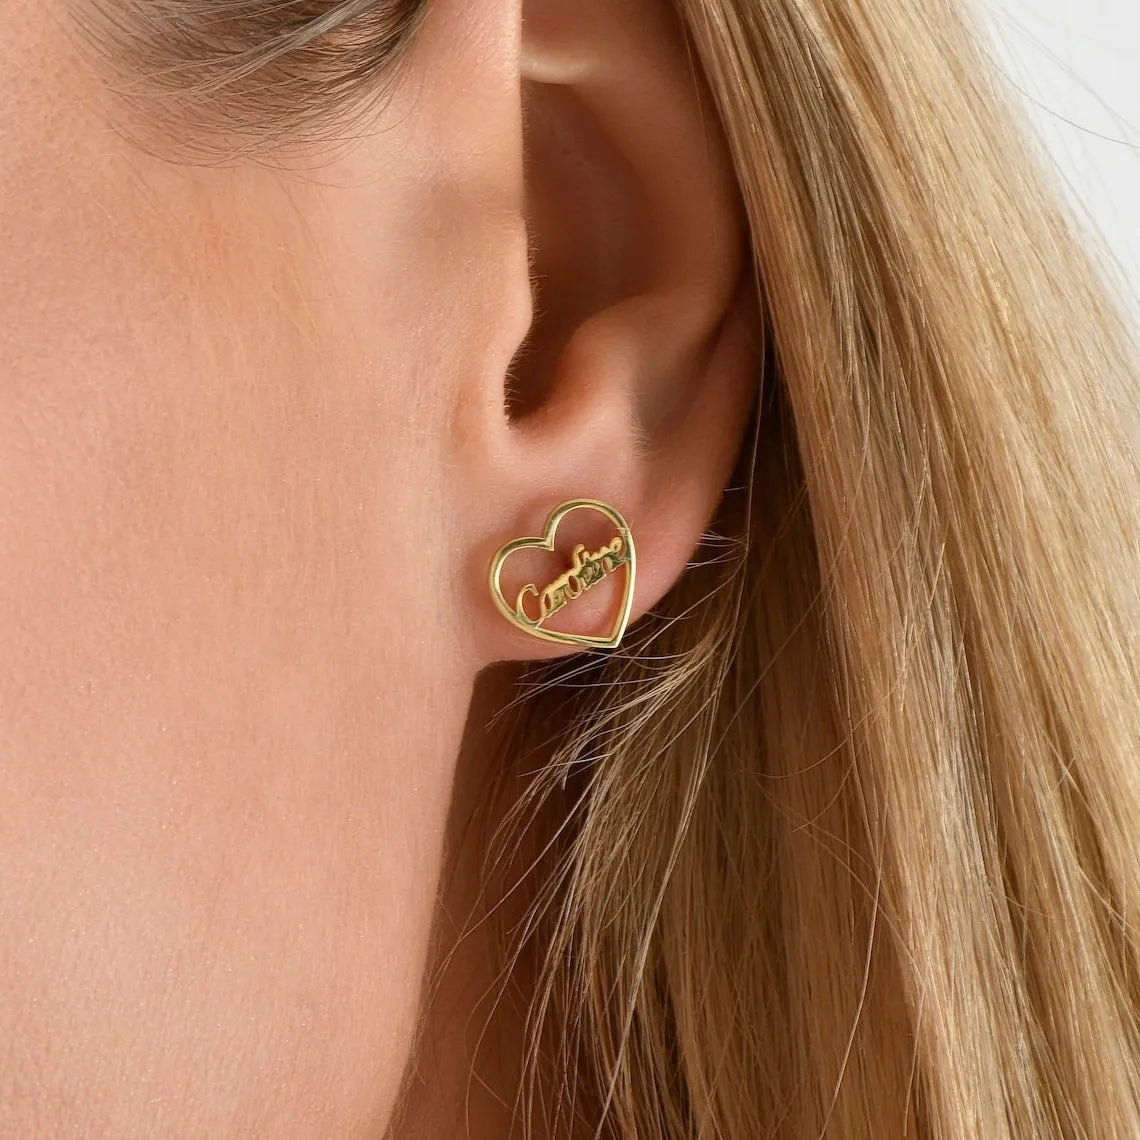 Custom Cute Small Heart Name Stud Earrings For Women Girl Jewelry Stainless Steel Gold Color Love Earrings Girlfriend Wife Gifts